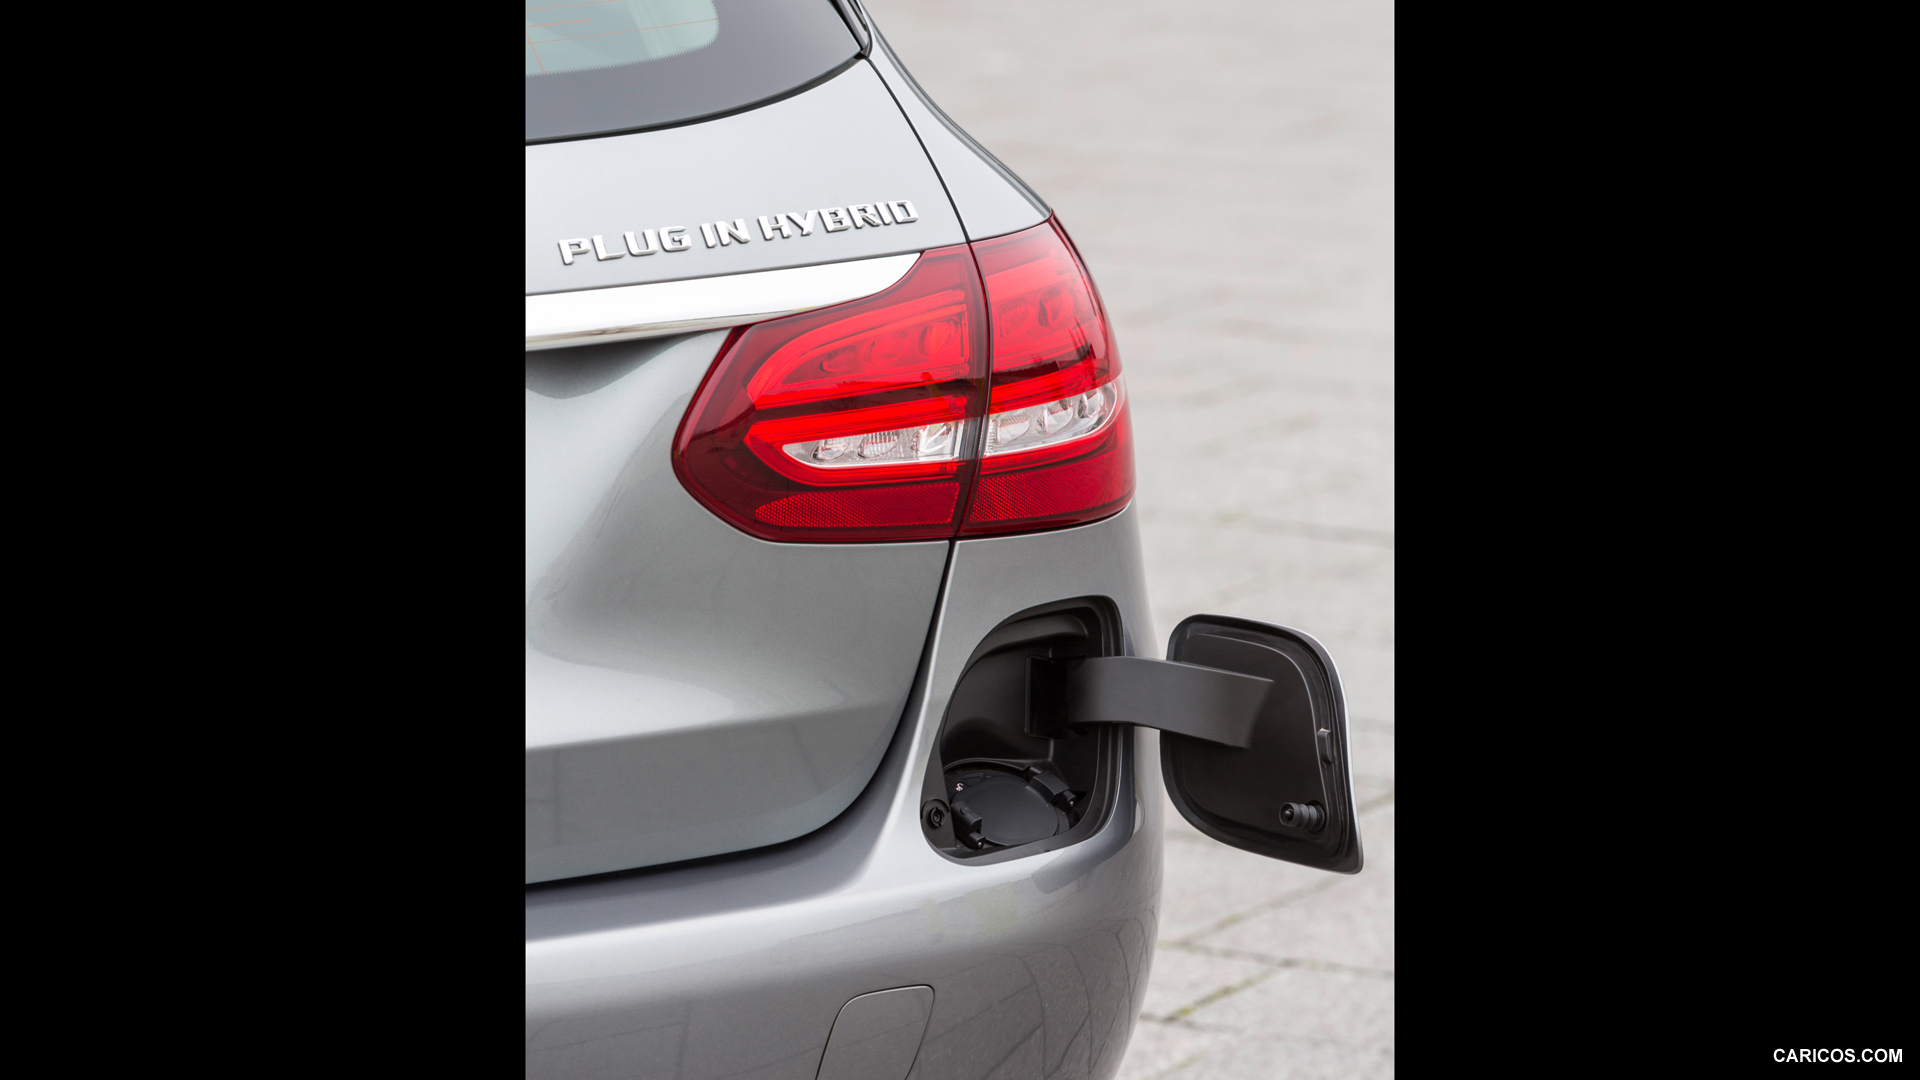  2016 Mercedes-Benz C350 Estate Plug-In Hybrid - Detail, #15 of 21